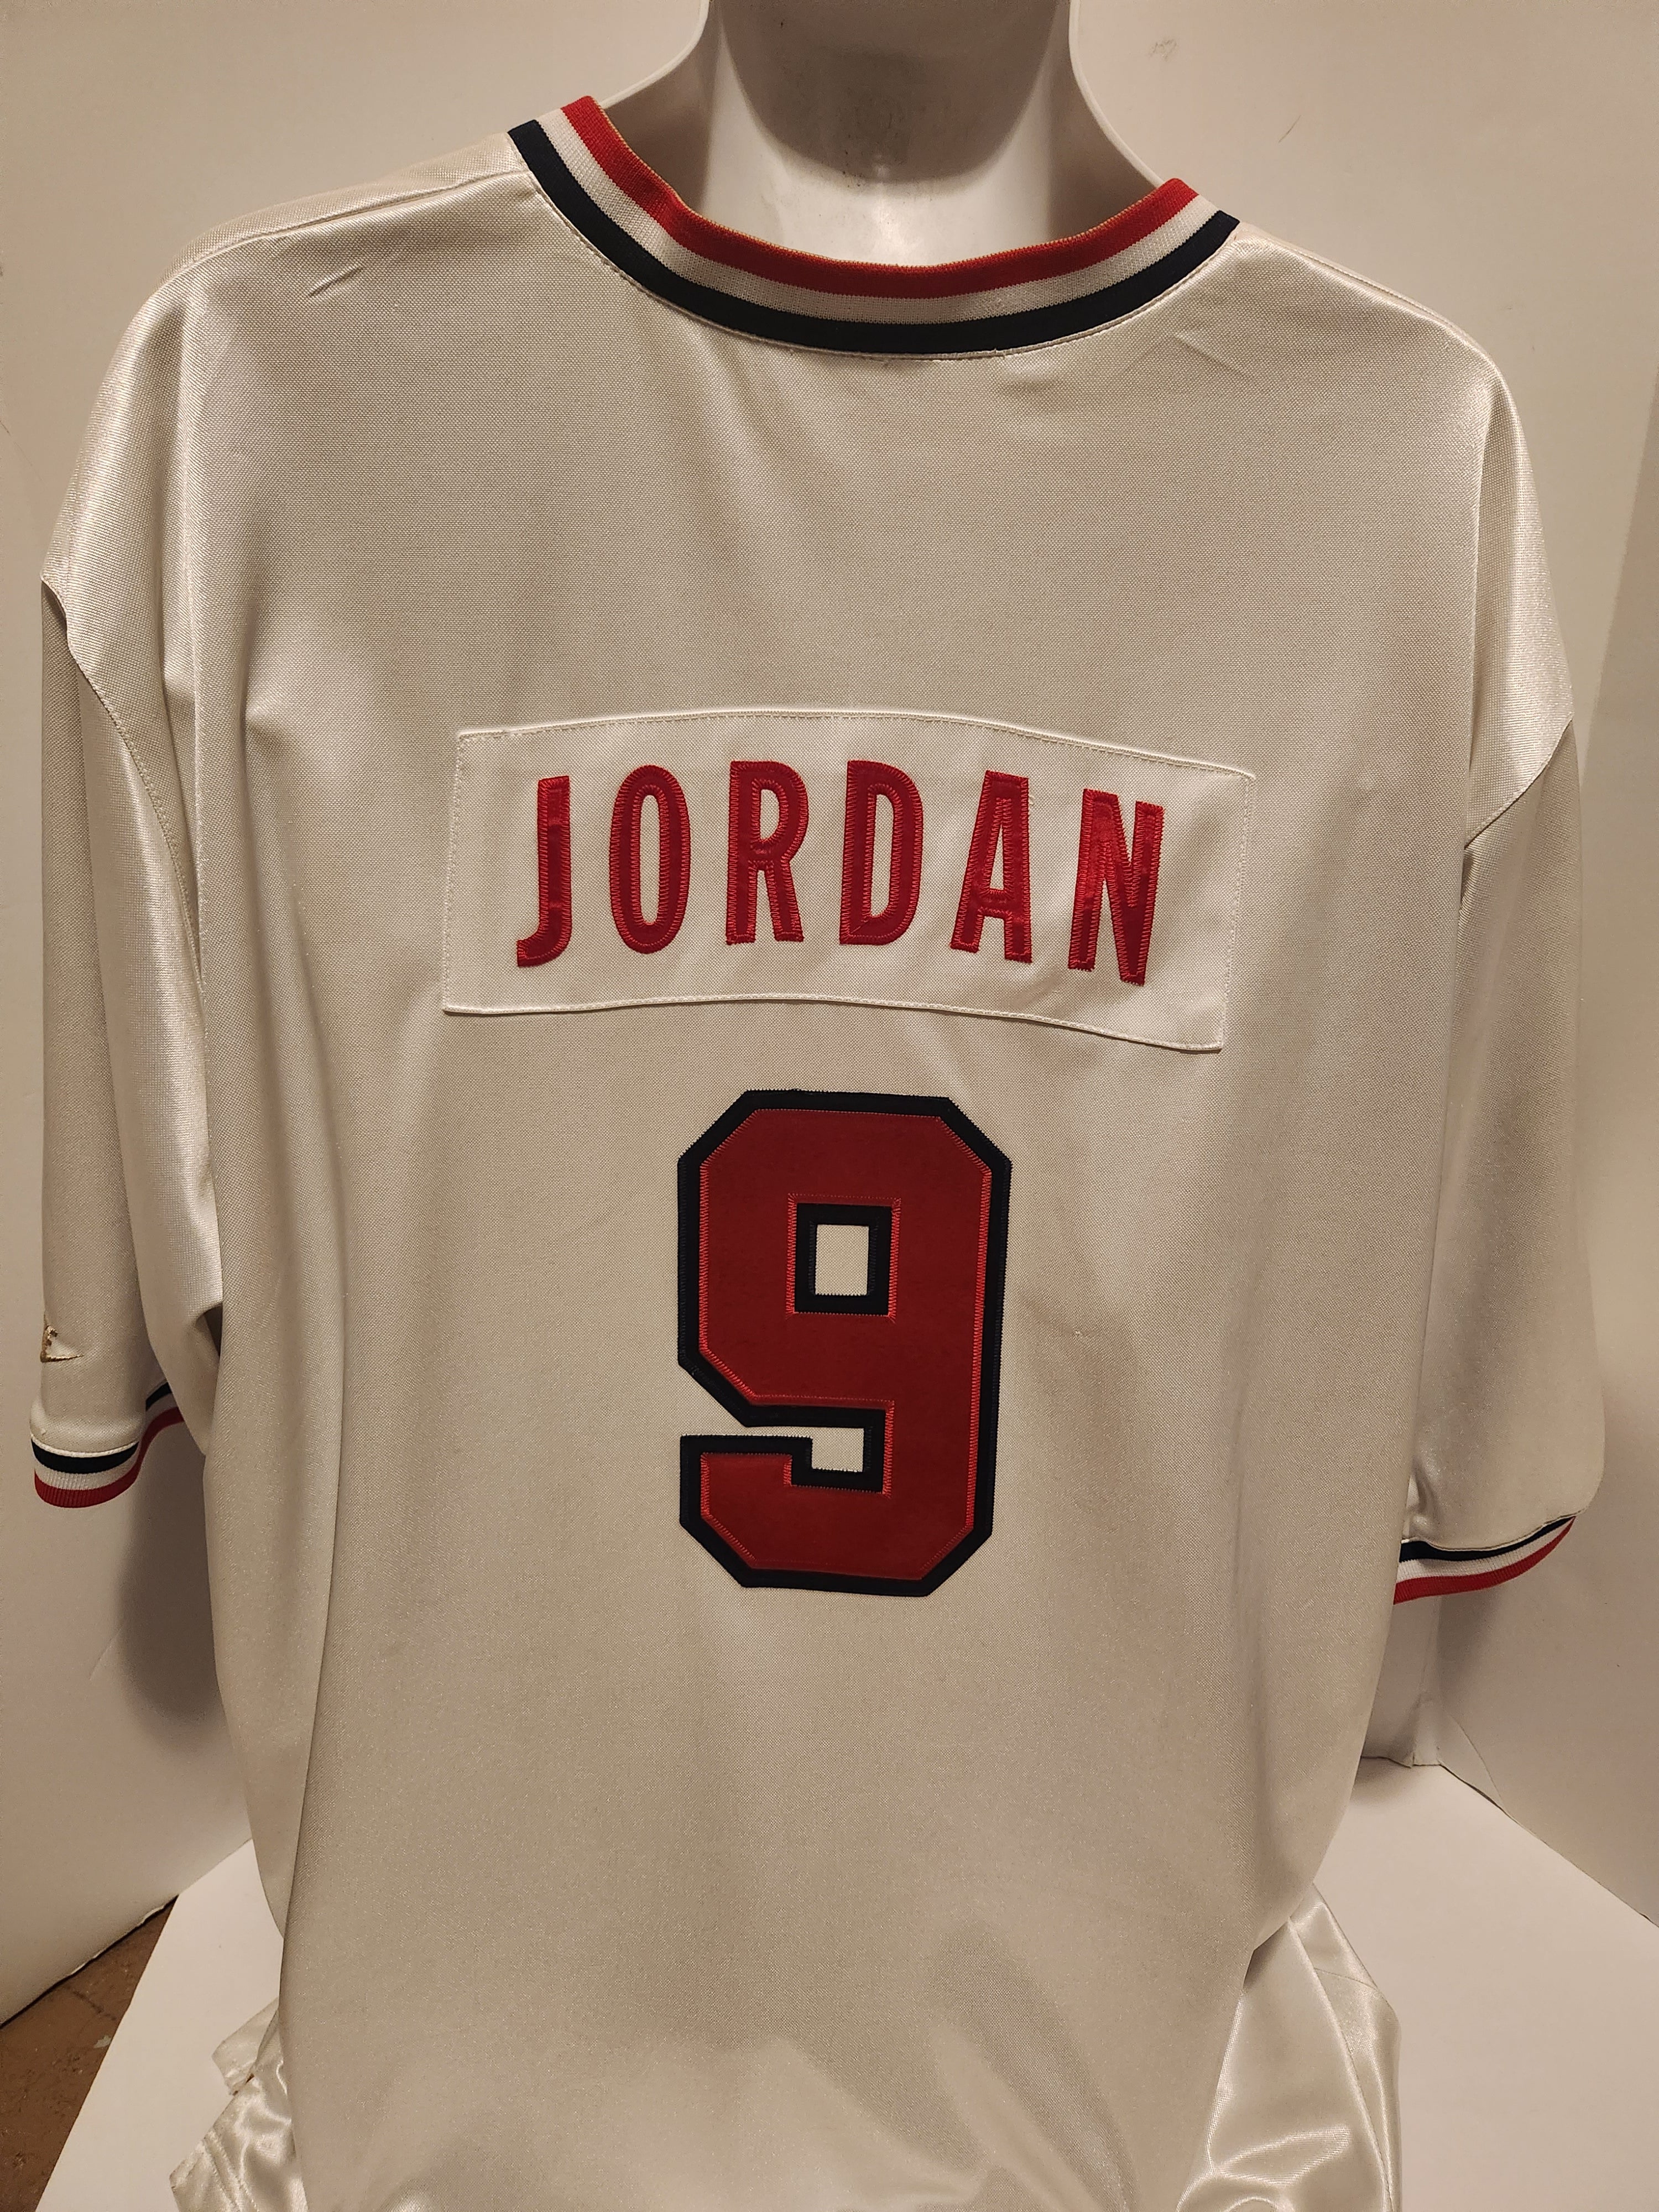 Michael Jordan, Larry Bird, Charles Barkley, Magic Johnson, Dream Team signed jersey with proof